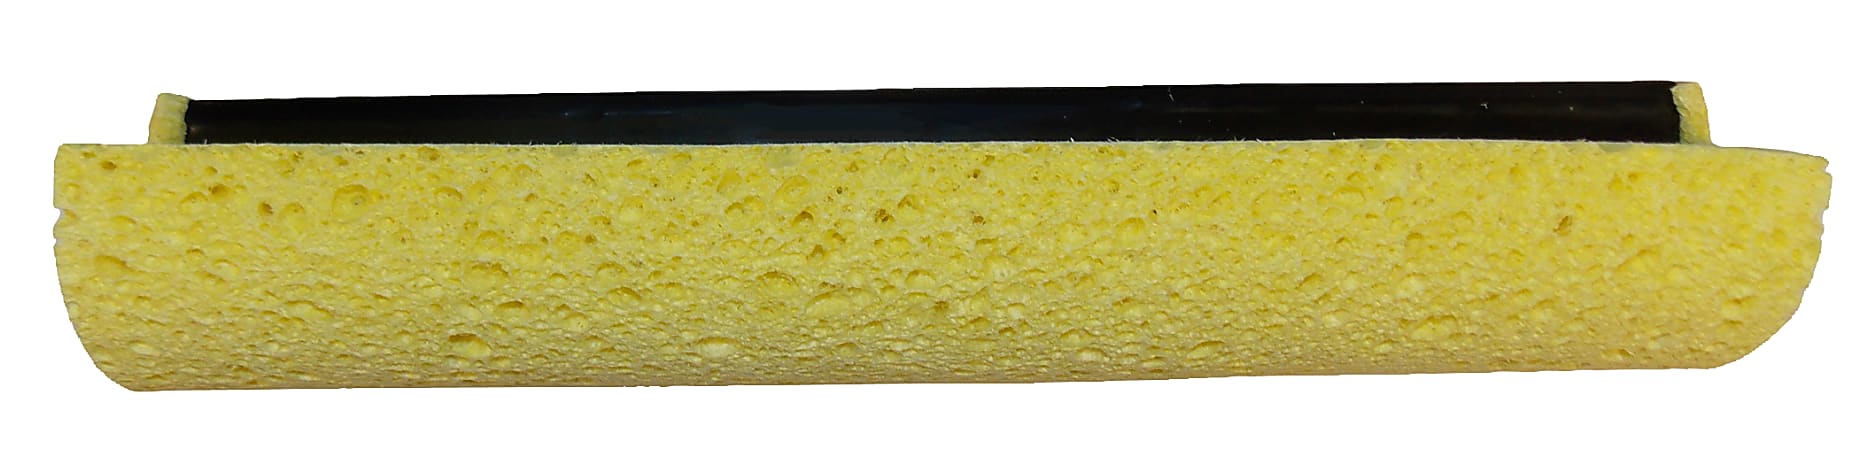 Wilen Roller Cellulose Sponge Refill, 12", Pack Of